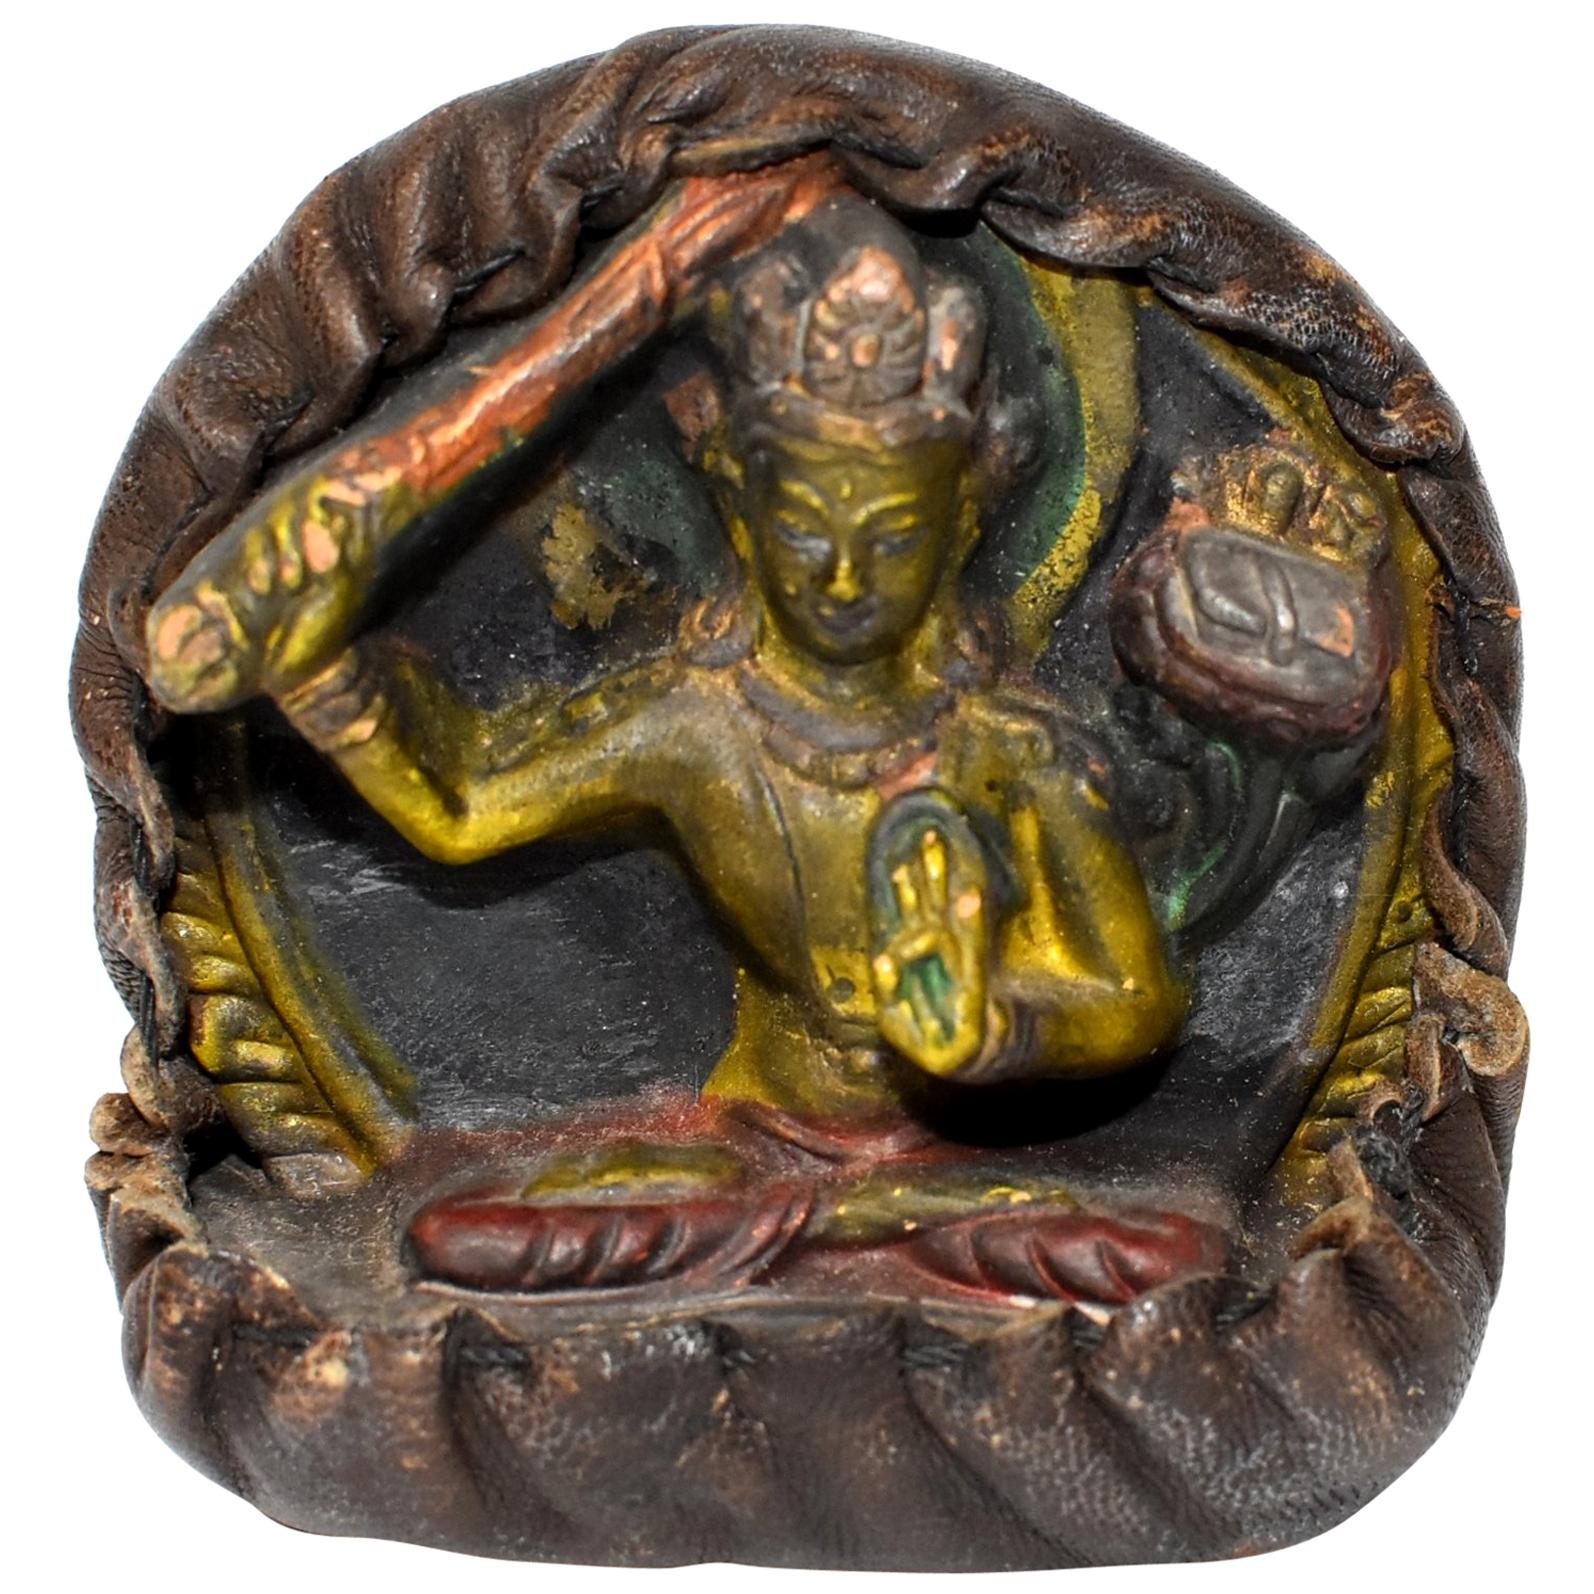 Antique Tibetan Amulet, Leather with Tara Holding Sword